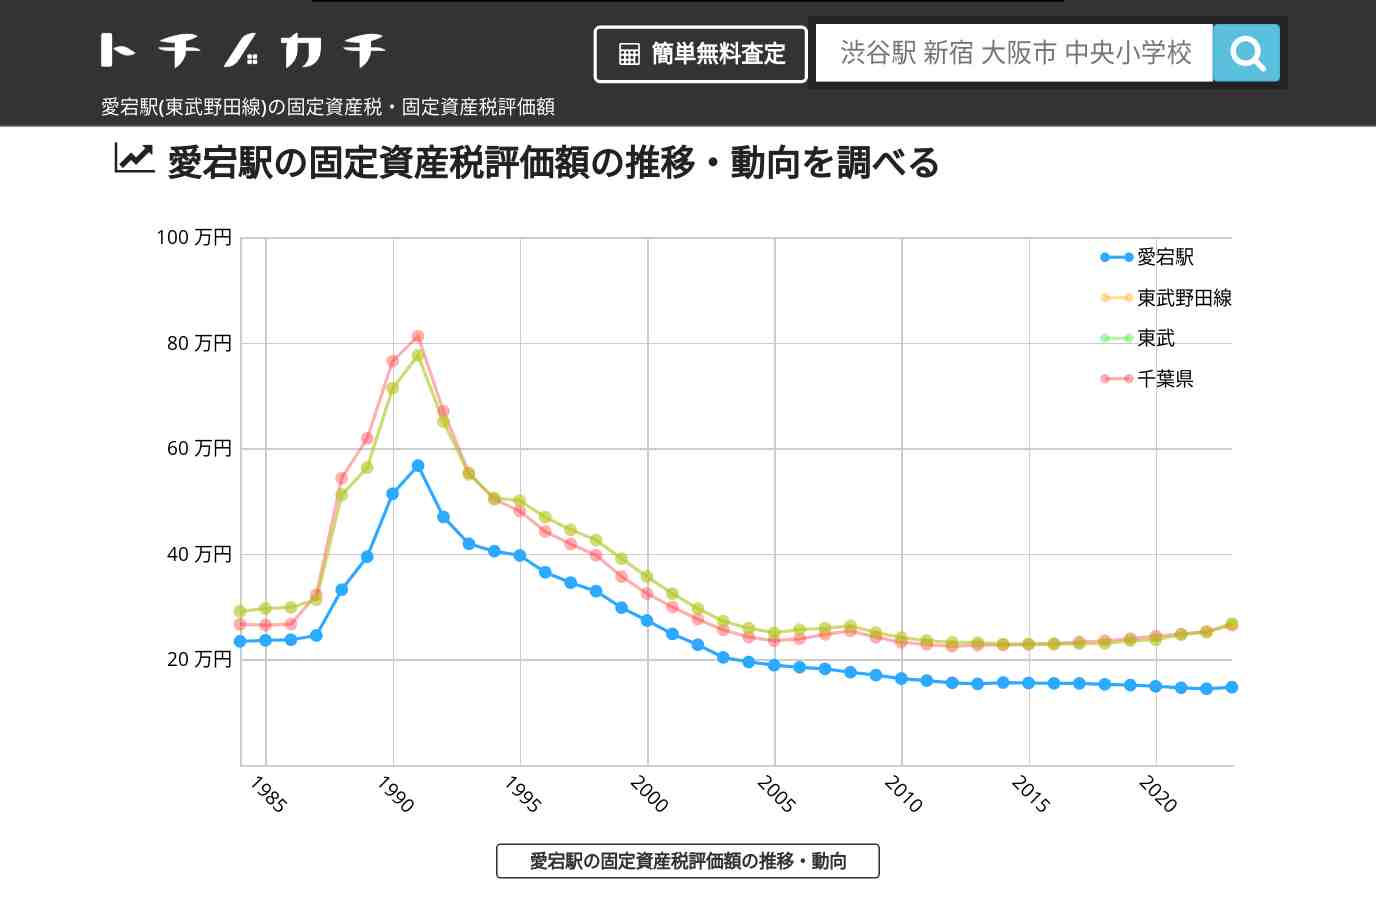 愛宕駅(東武野田線)の固定資産税・固定資産税評価額 | トチノカチ